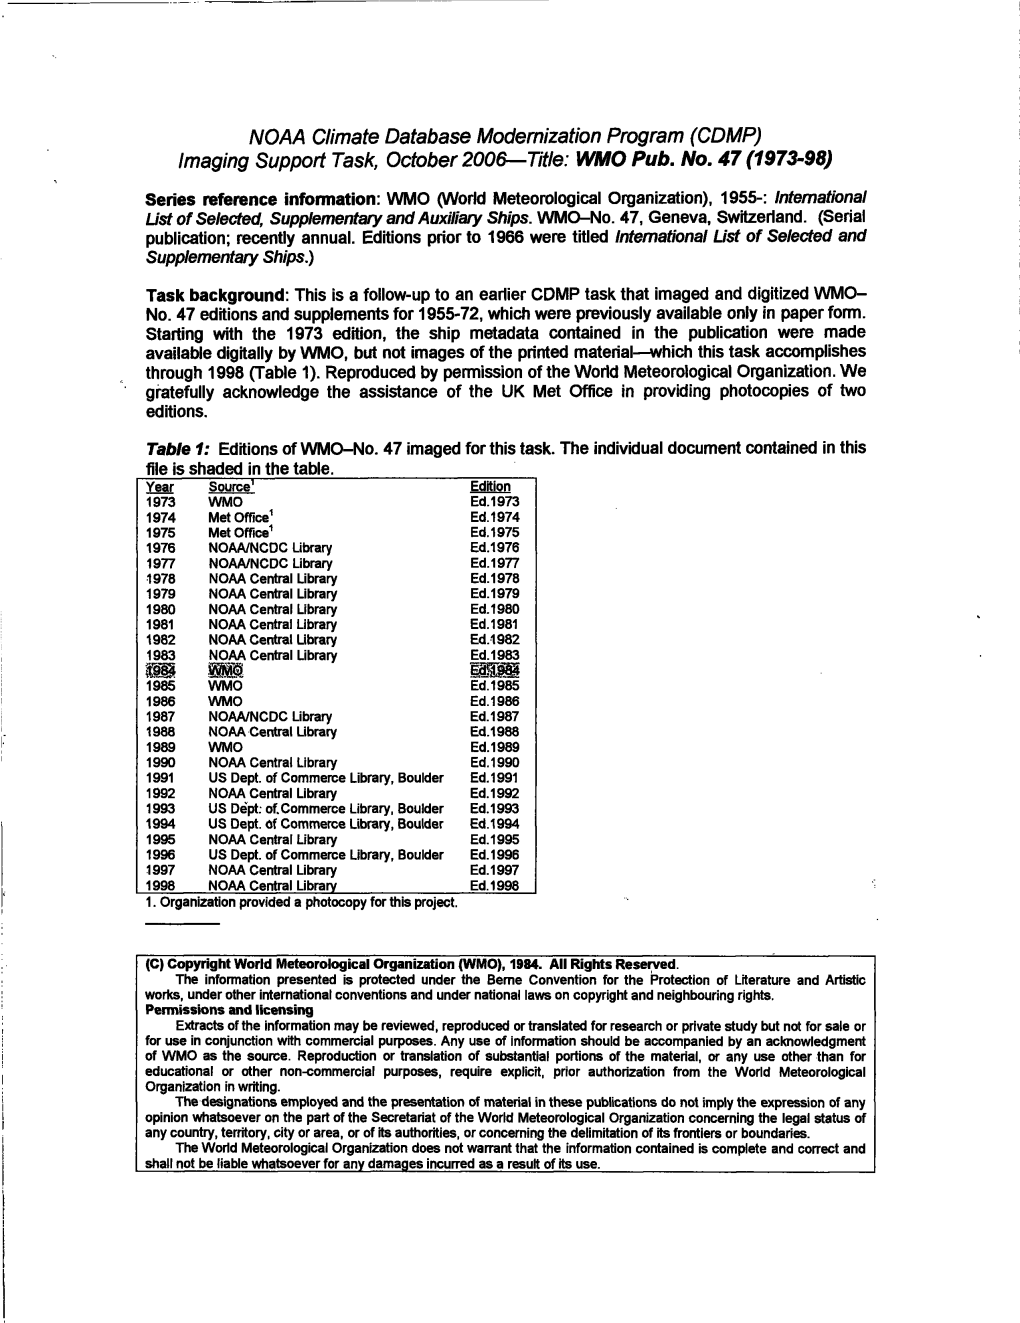 NOAA Climate Database Modernization Program (CDMP) Imaging Support Task, October 2006-Title: WMO Pub